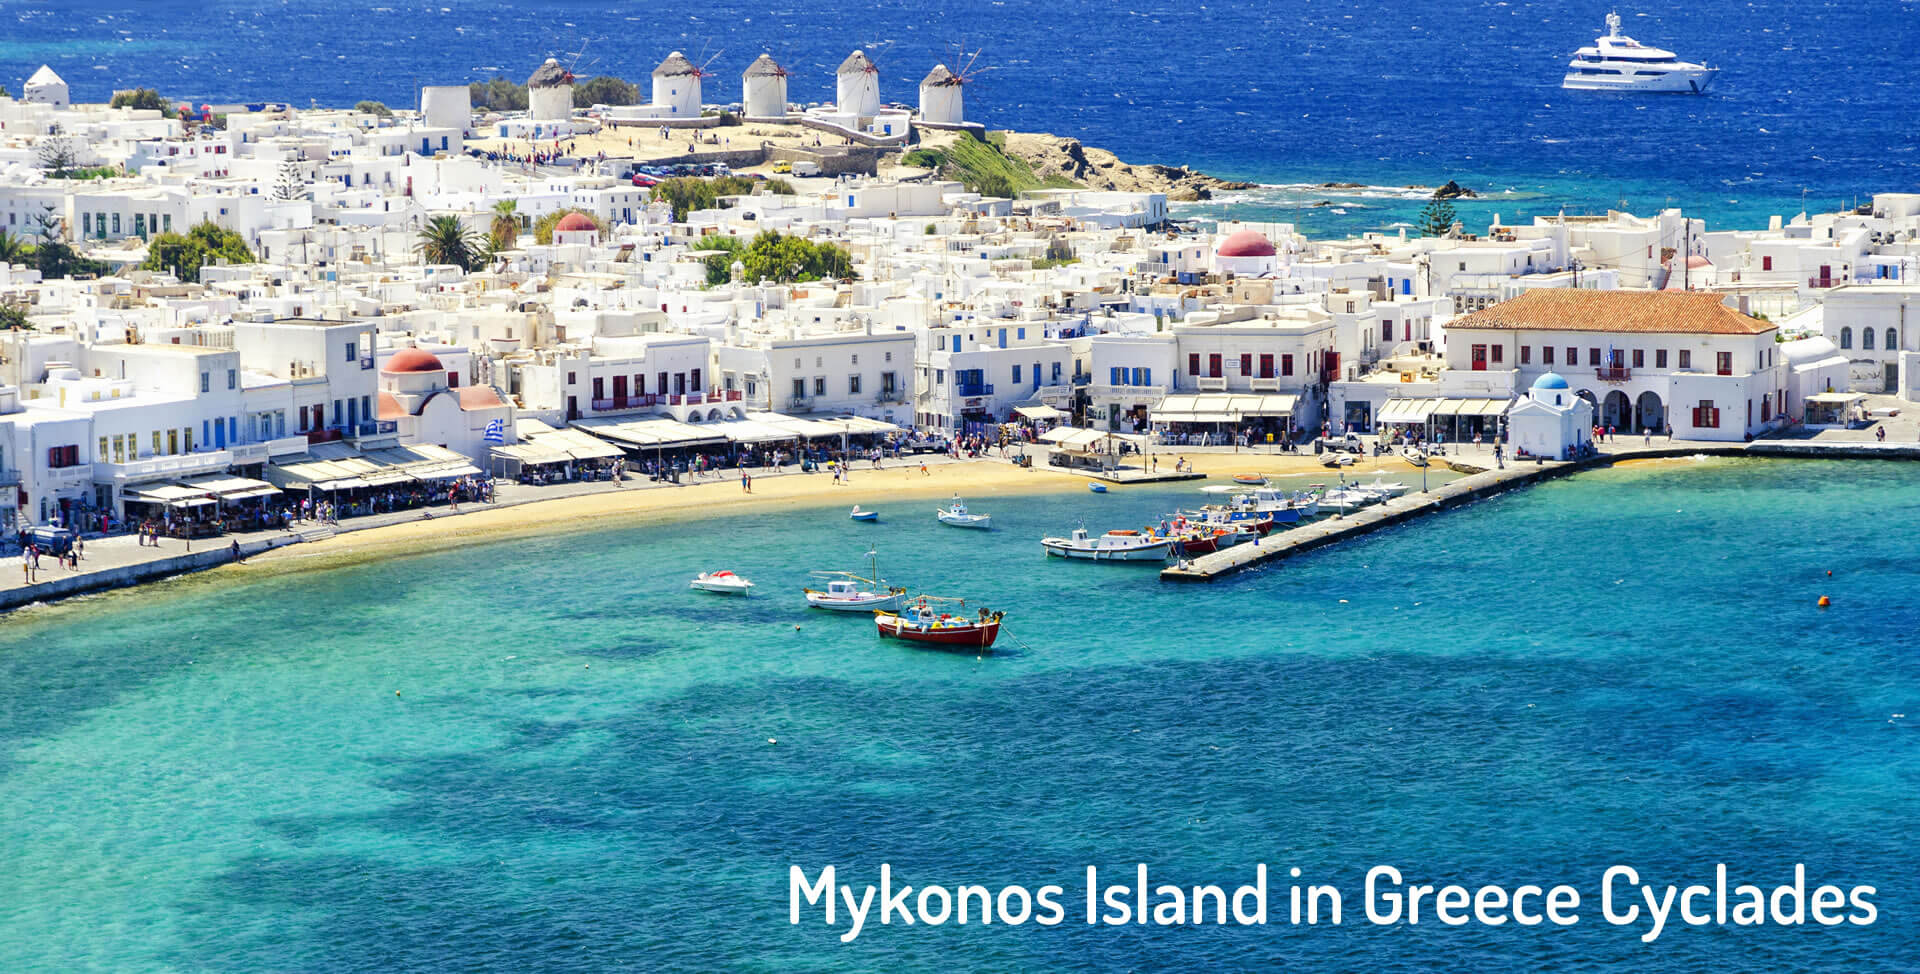 Mykonos Island in Greece Cyclades